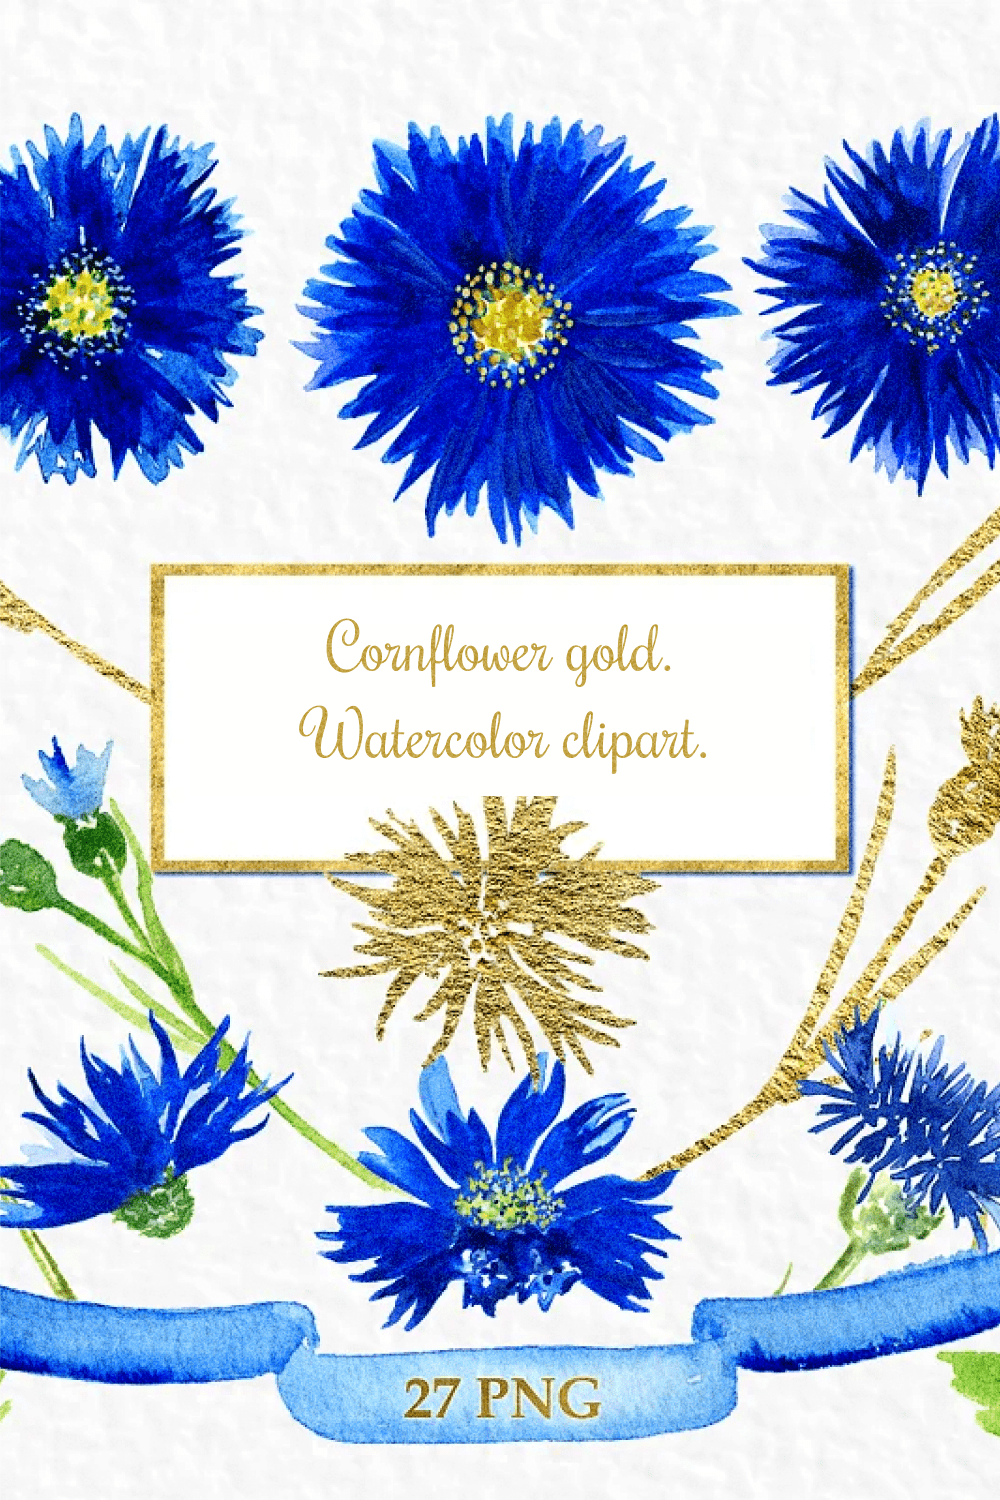 Cornflower gold. Watercolor clipart - pinterest image preview.